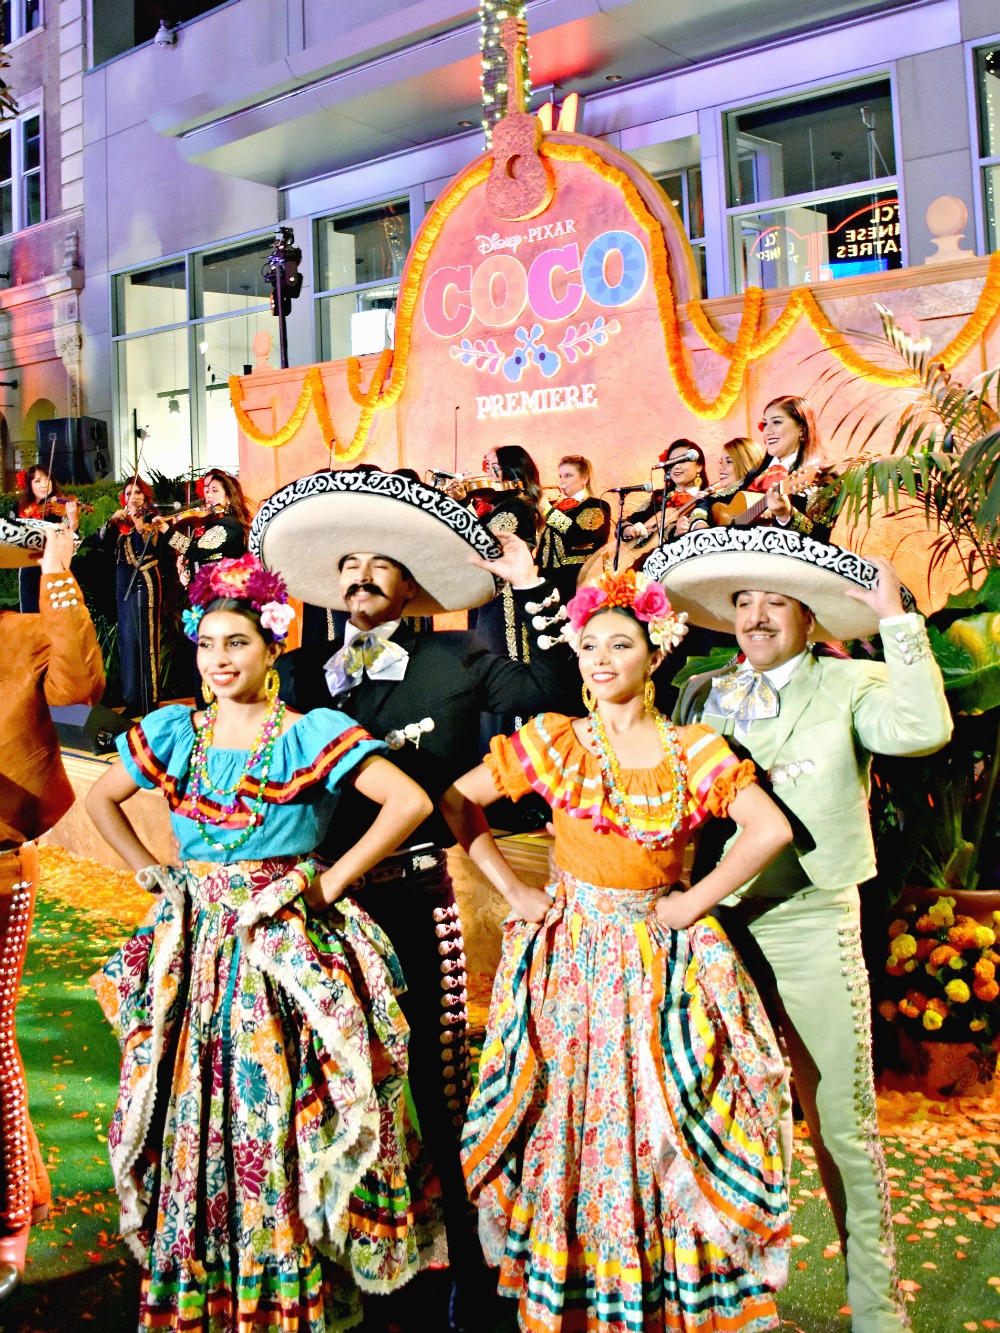 Folklorico dancers at Coco premiere - LivingMiVidaLoca.com